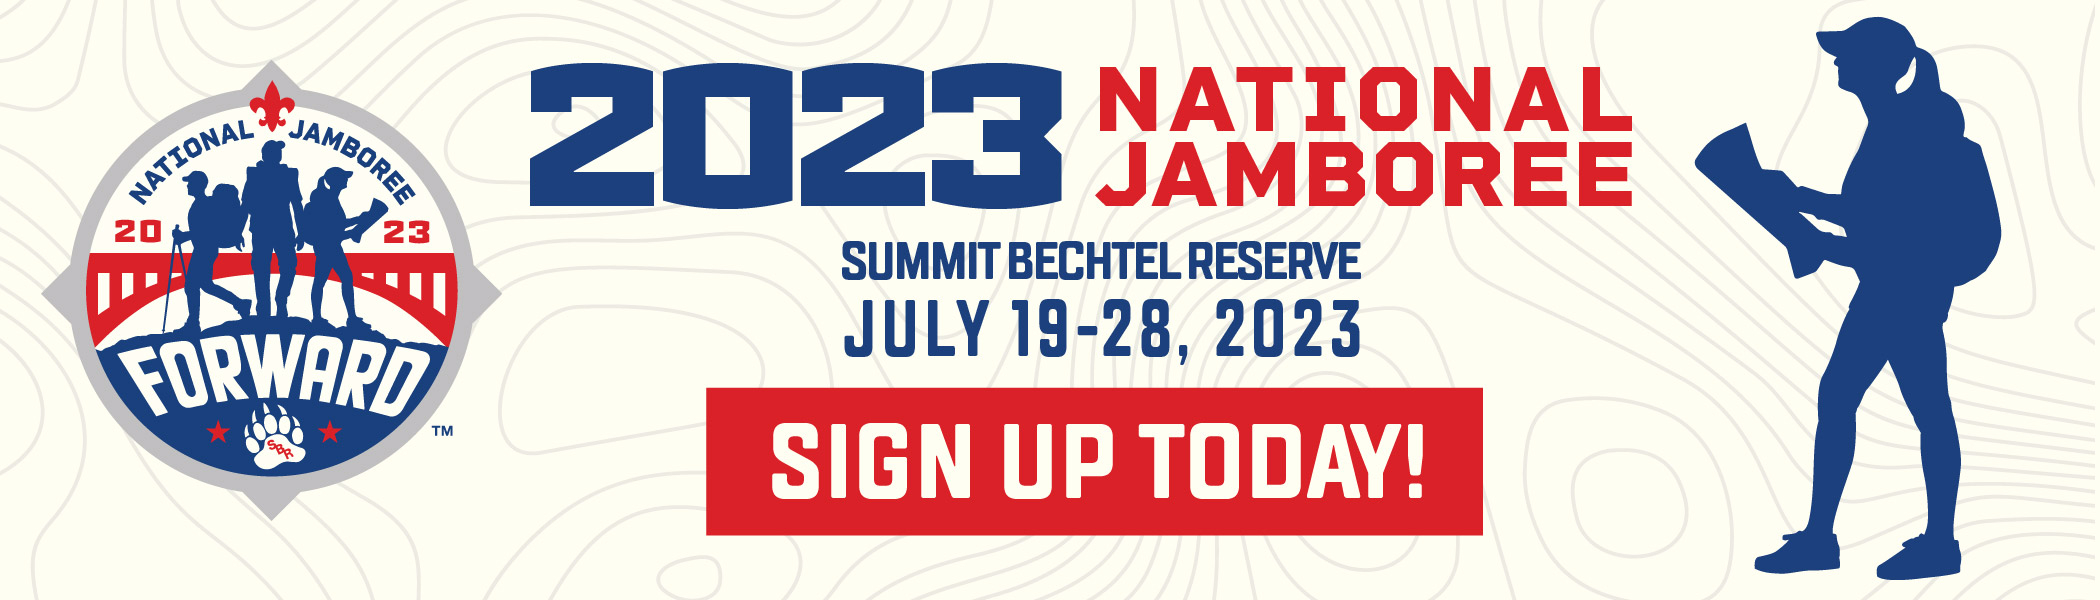 2023 National Jamboree